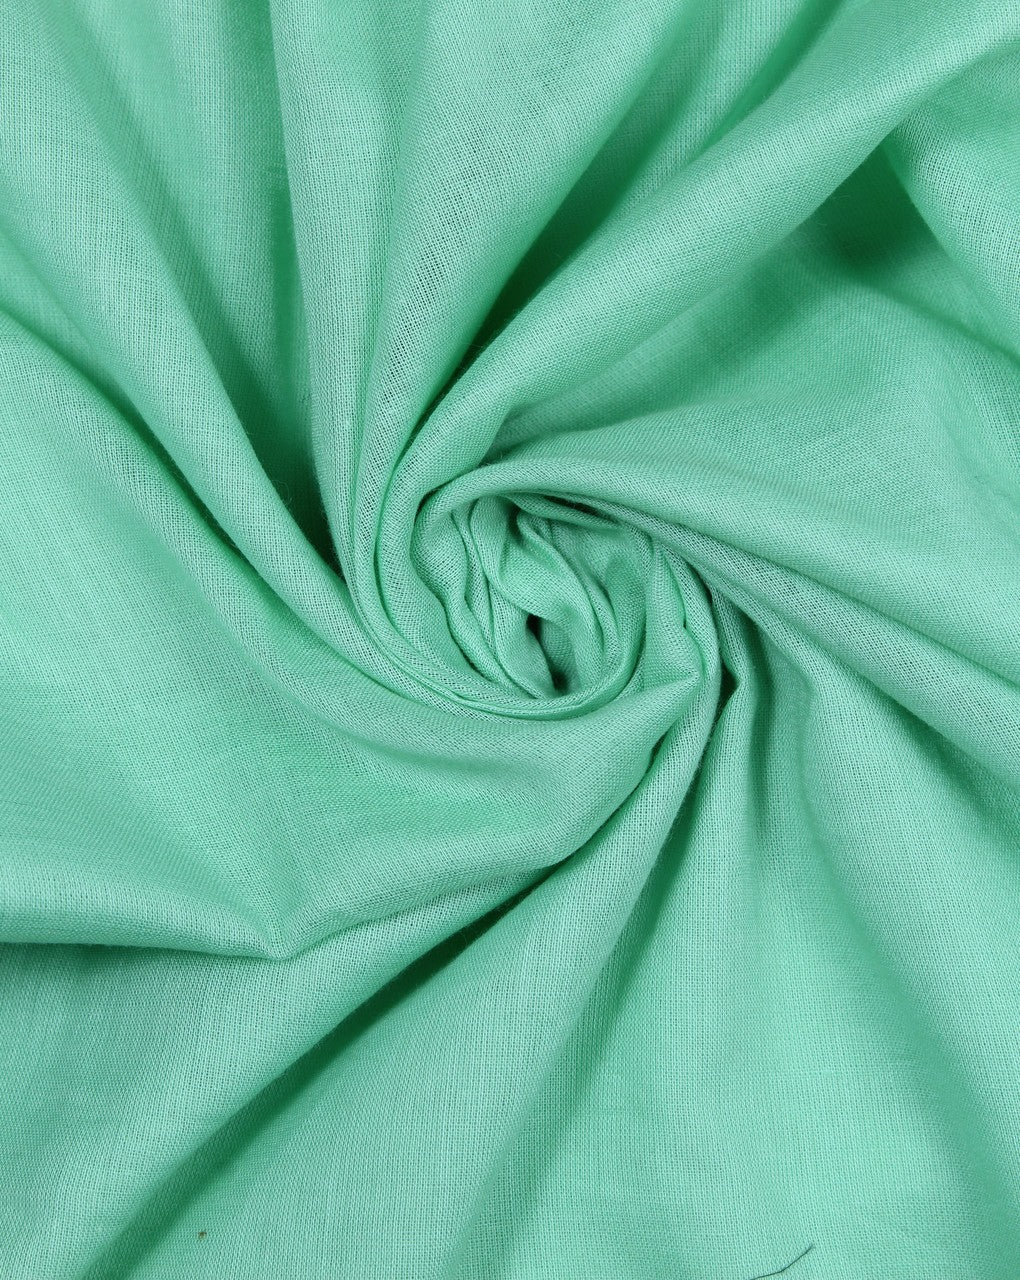 Plain Light Green Color Cotton Cambric Fabric